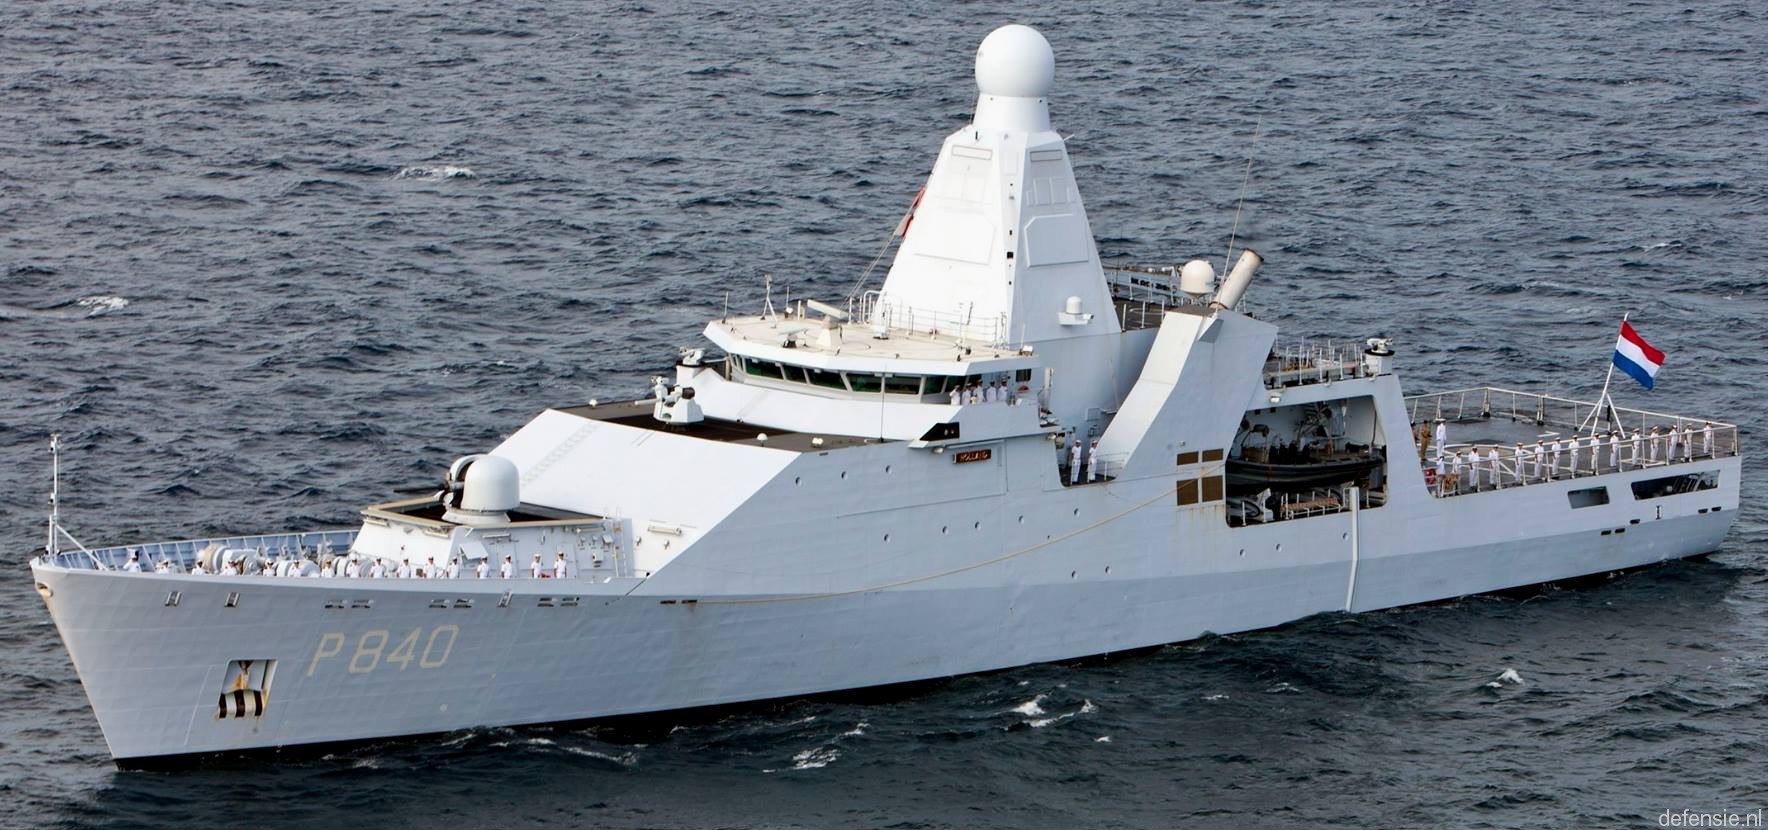 p-840 hnlms holland offshore patrol vessel opv royal netherlands navy 15 koninklijke marine